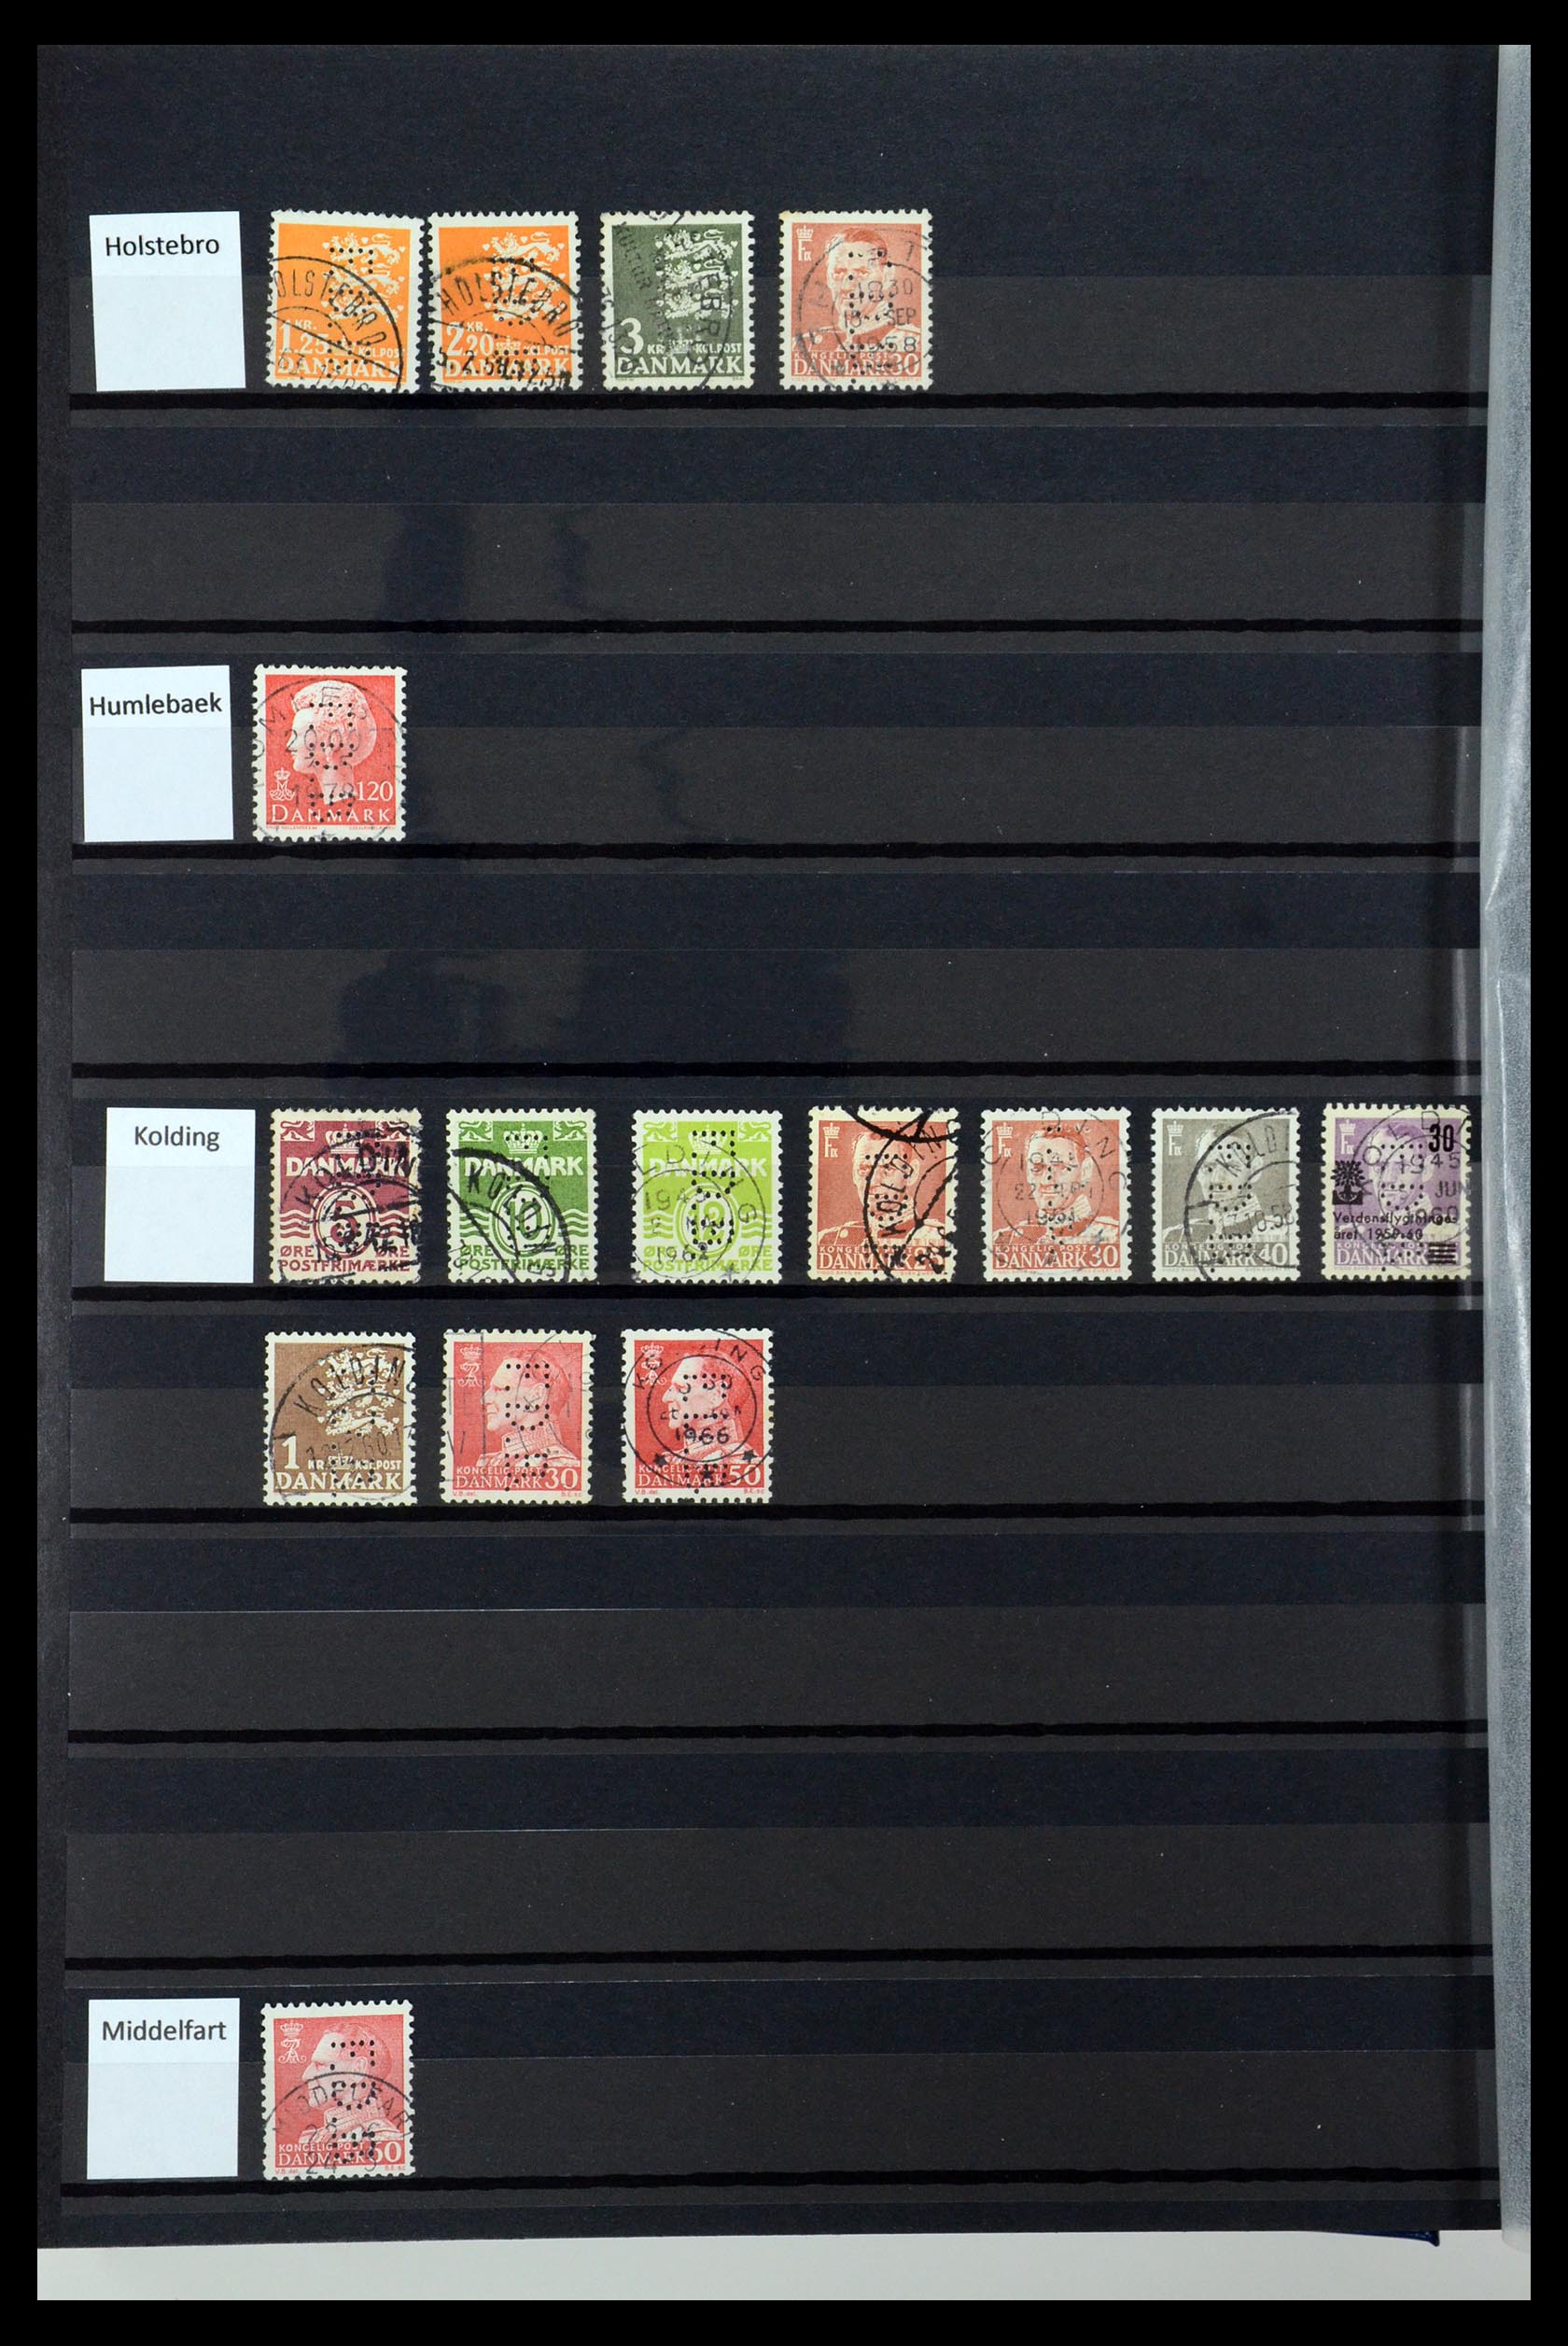 36396 070 - Stamp collection 36396 Denmark perfins.